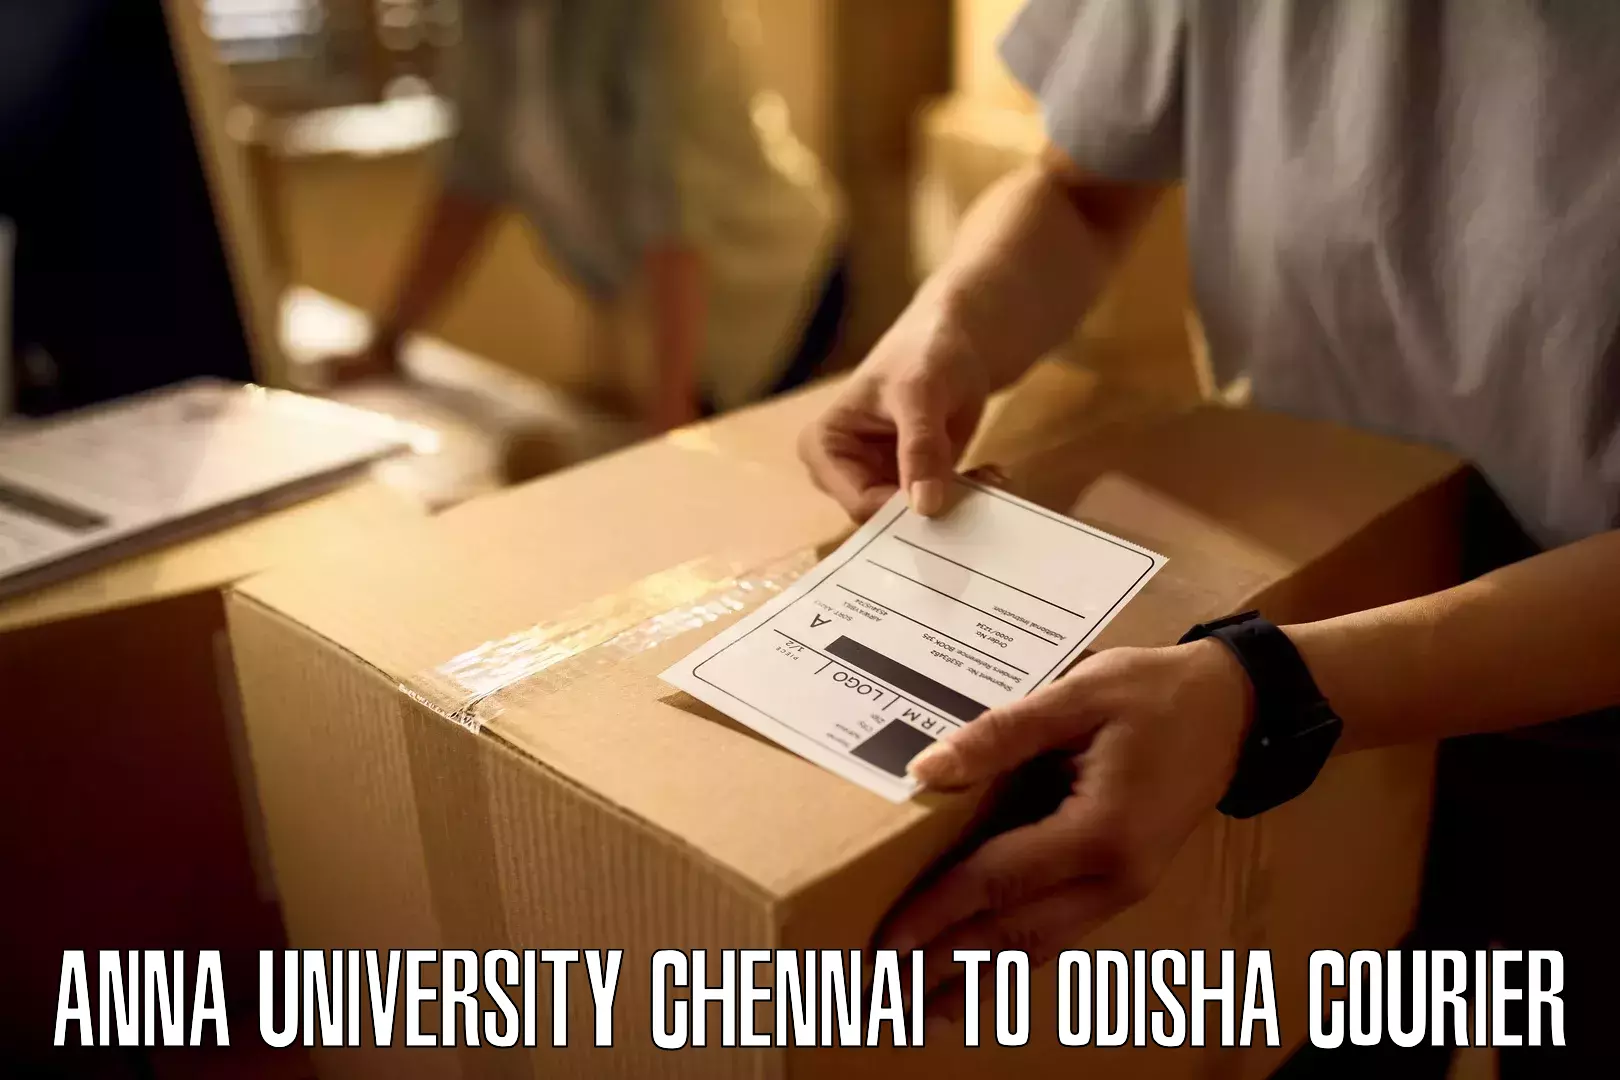 Courier service efficiency Anna University Chennai to Soro